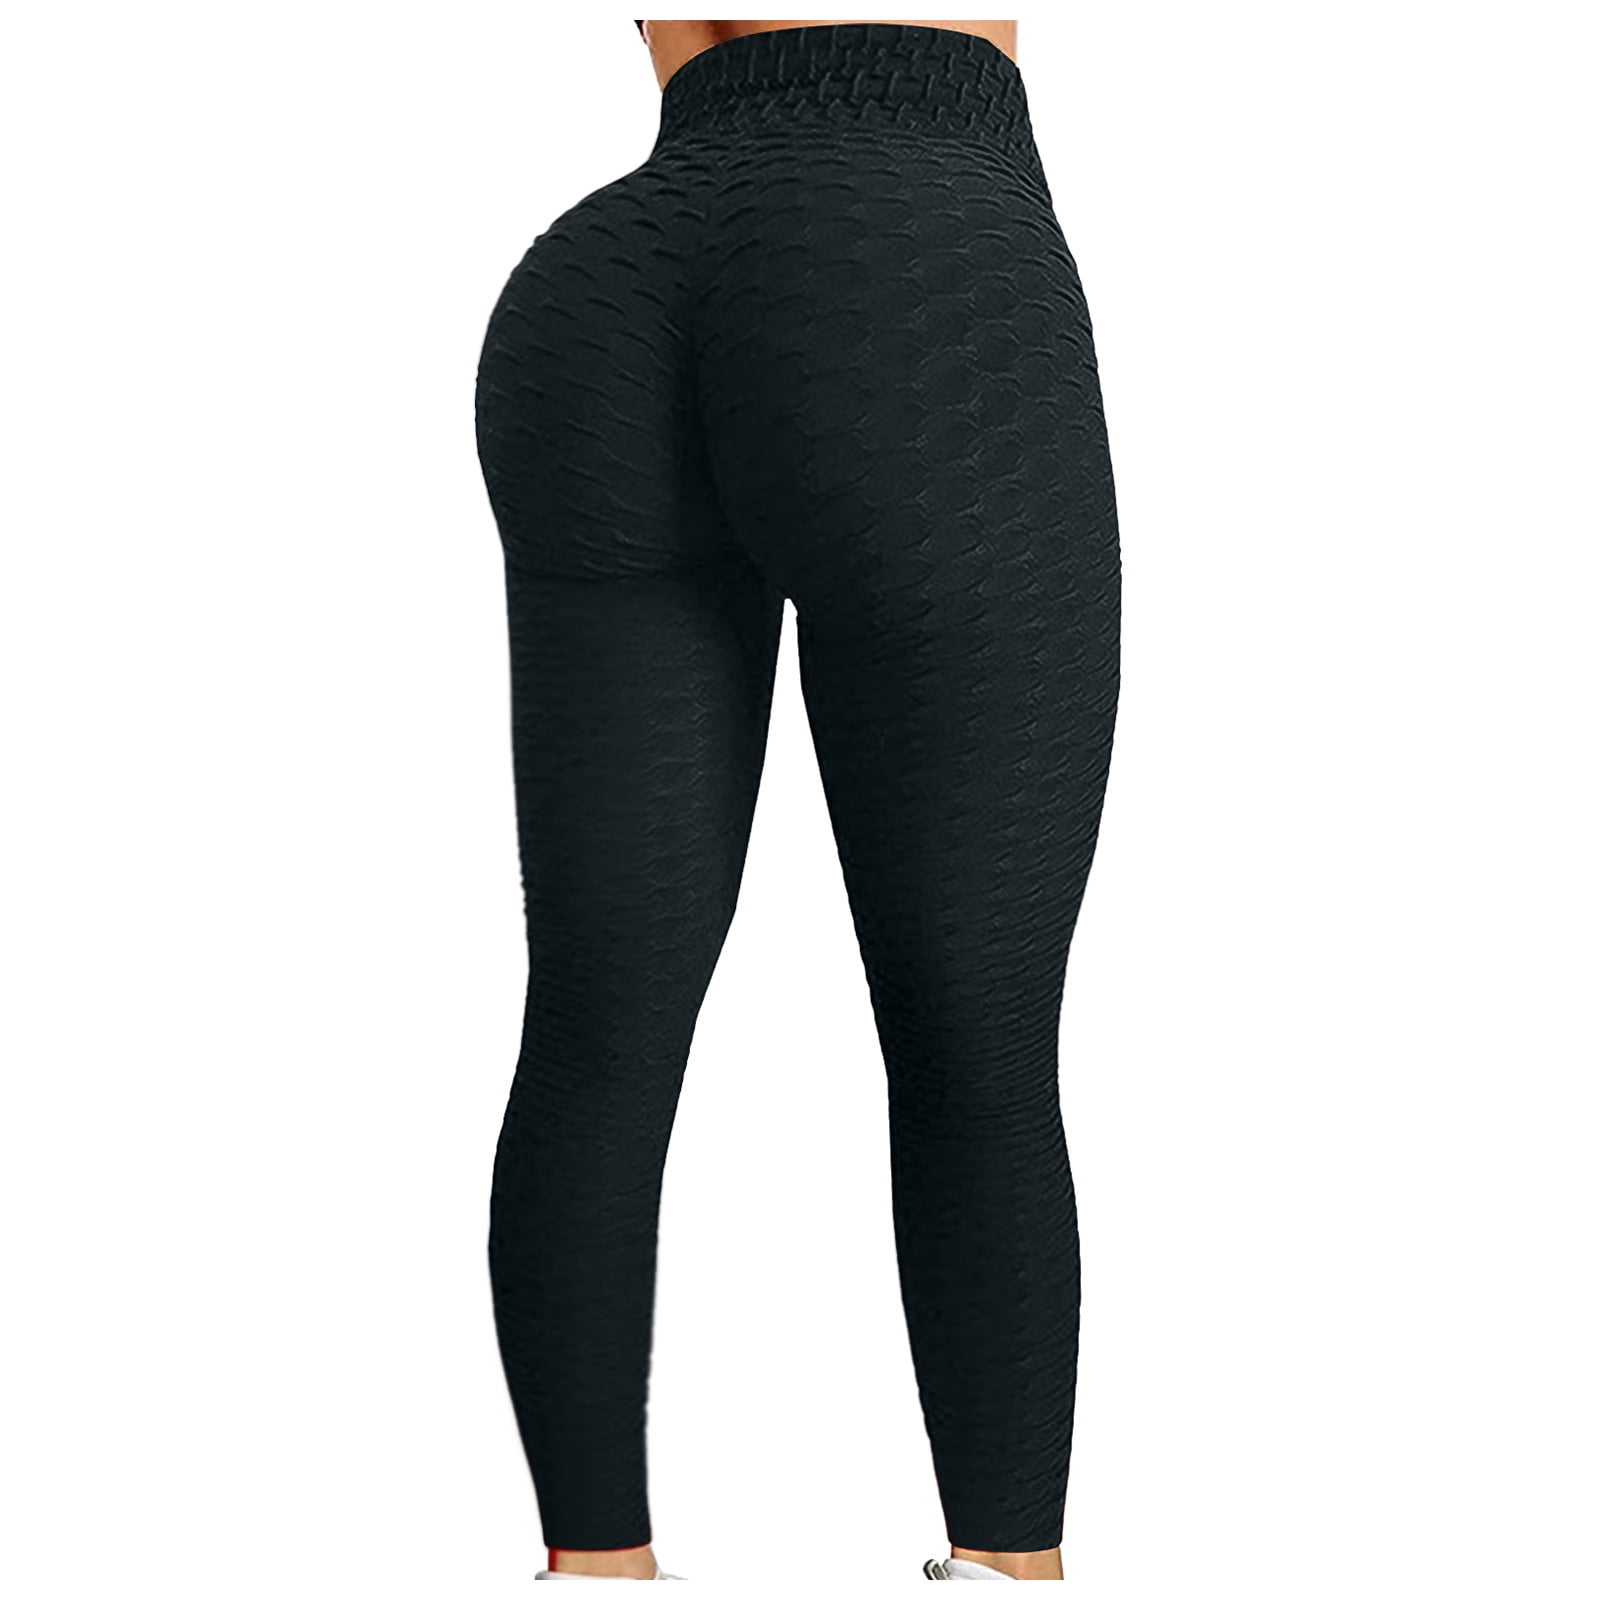 HSMQHJWE High Waist Yoga Pants Pocket Yoga Pants Tummy Control Workout  Running 4 Way Stretch Yoga Leggingswomen legging jogger 